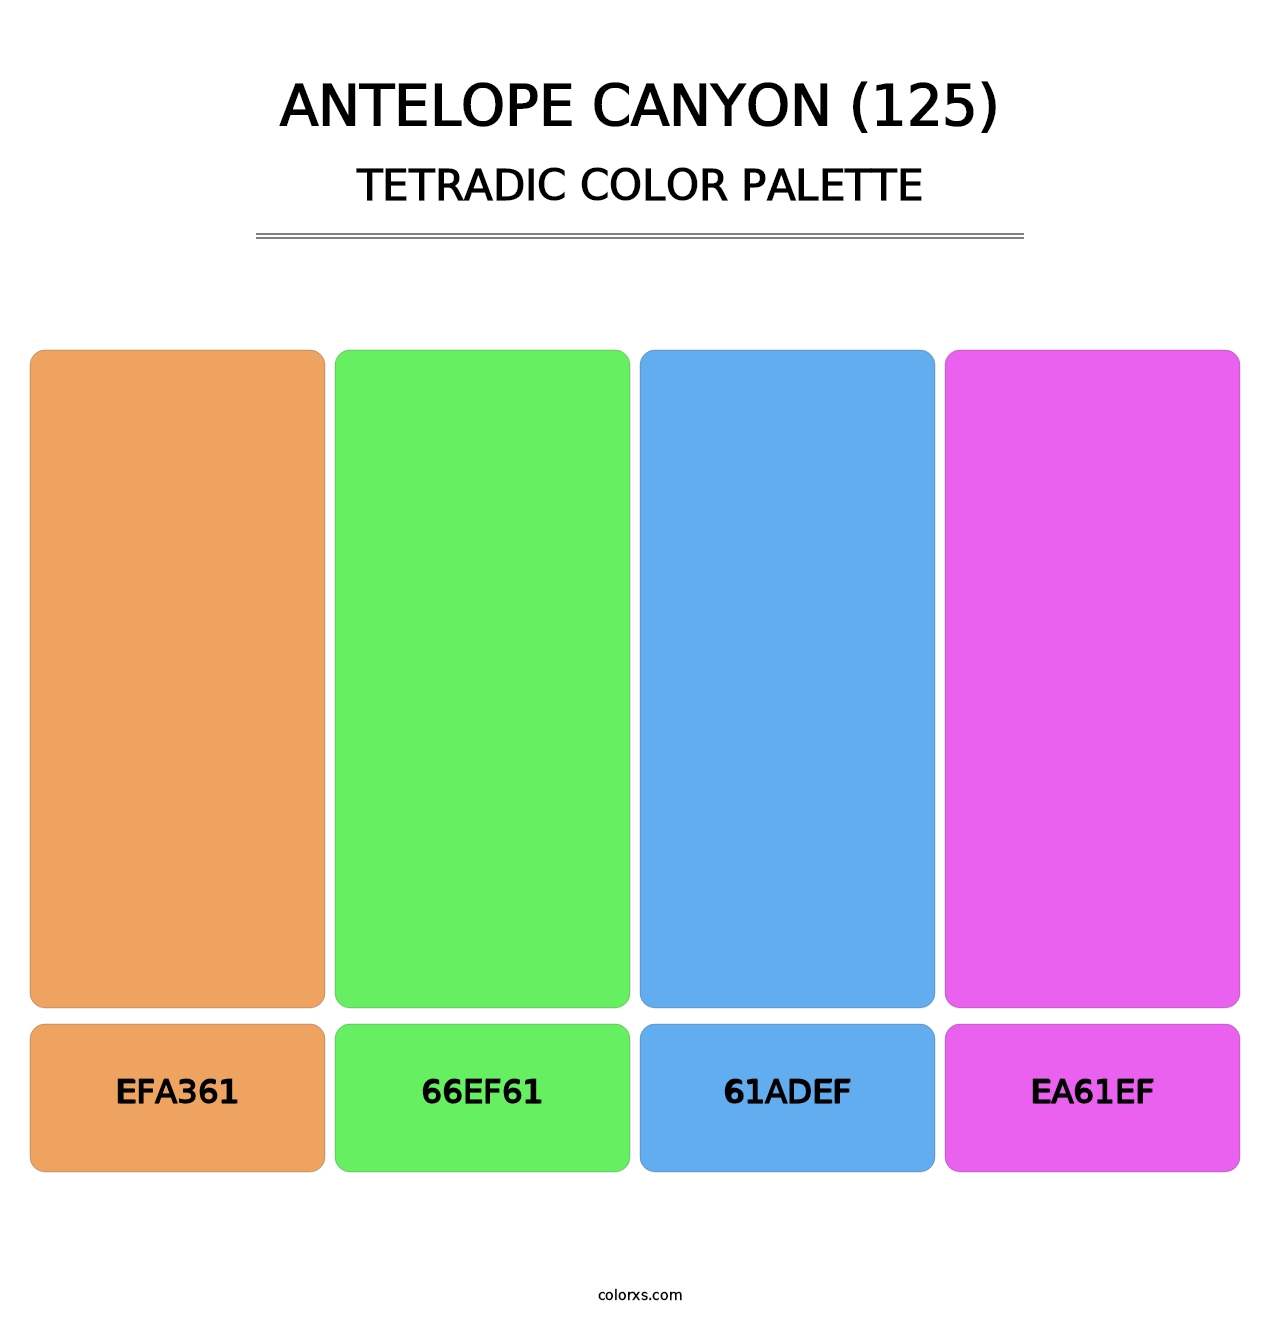 Antelope Canyon (125) - Tetradic Color Palette